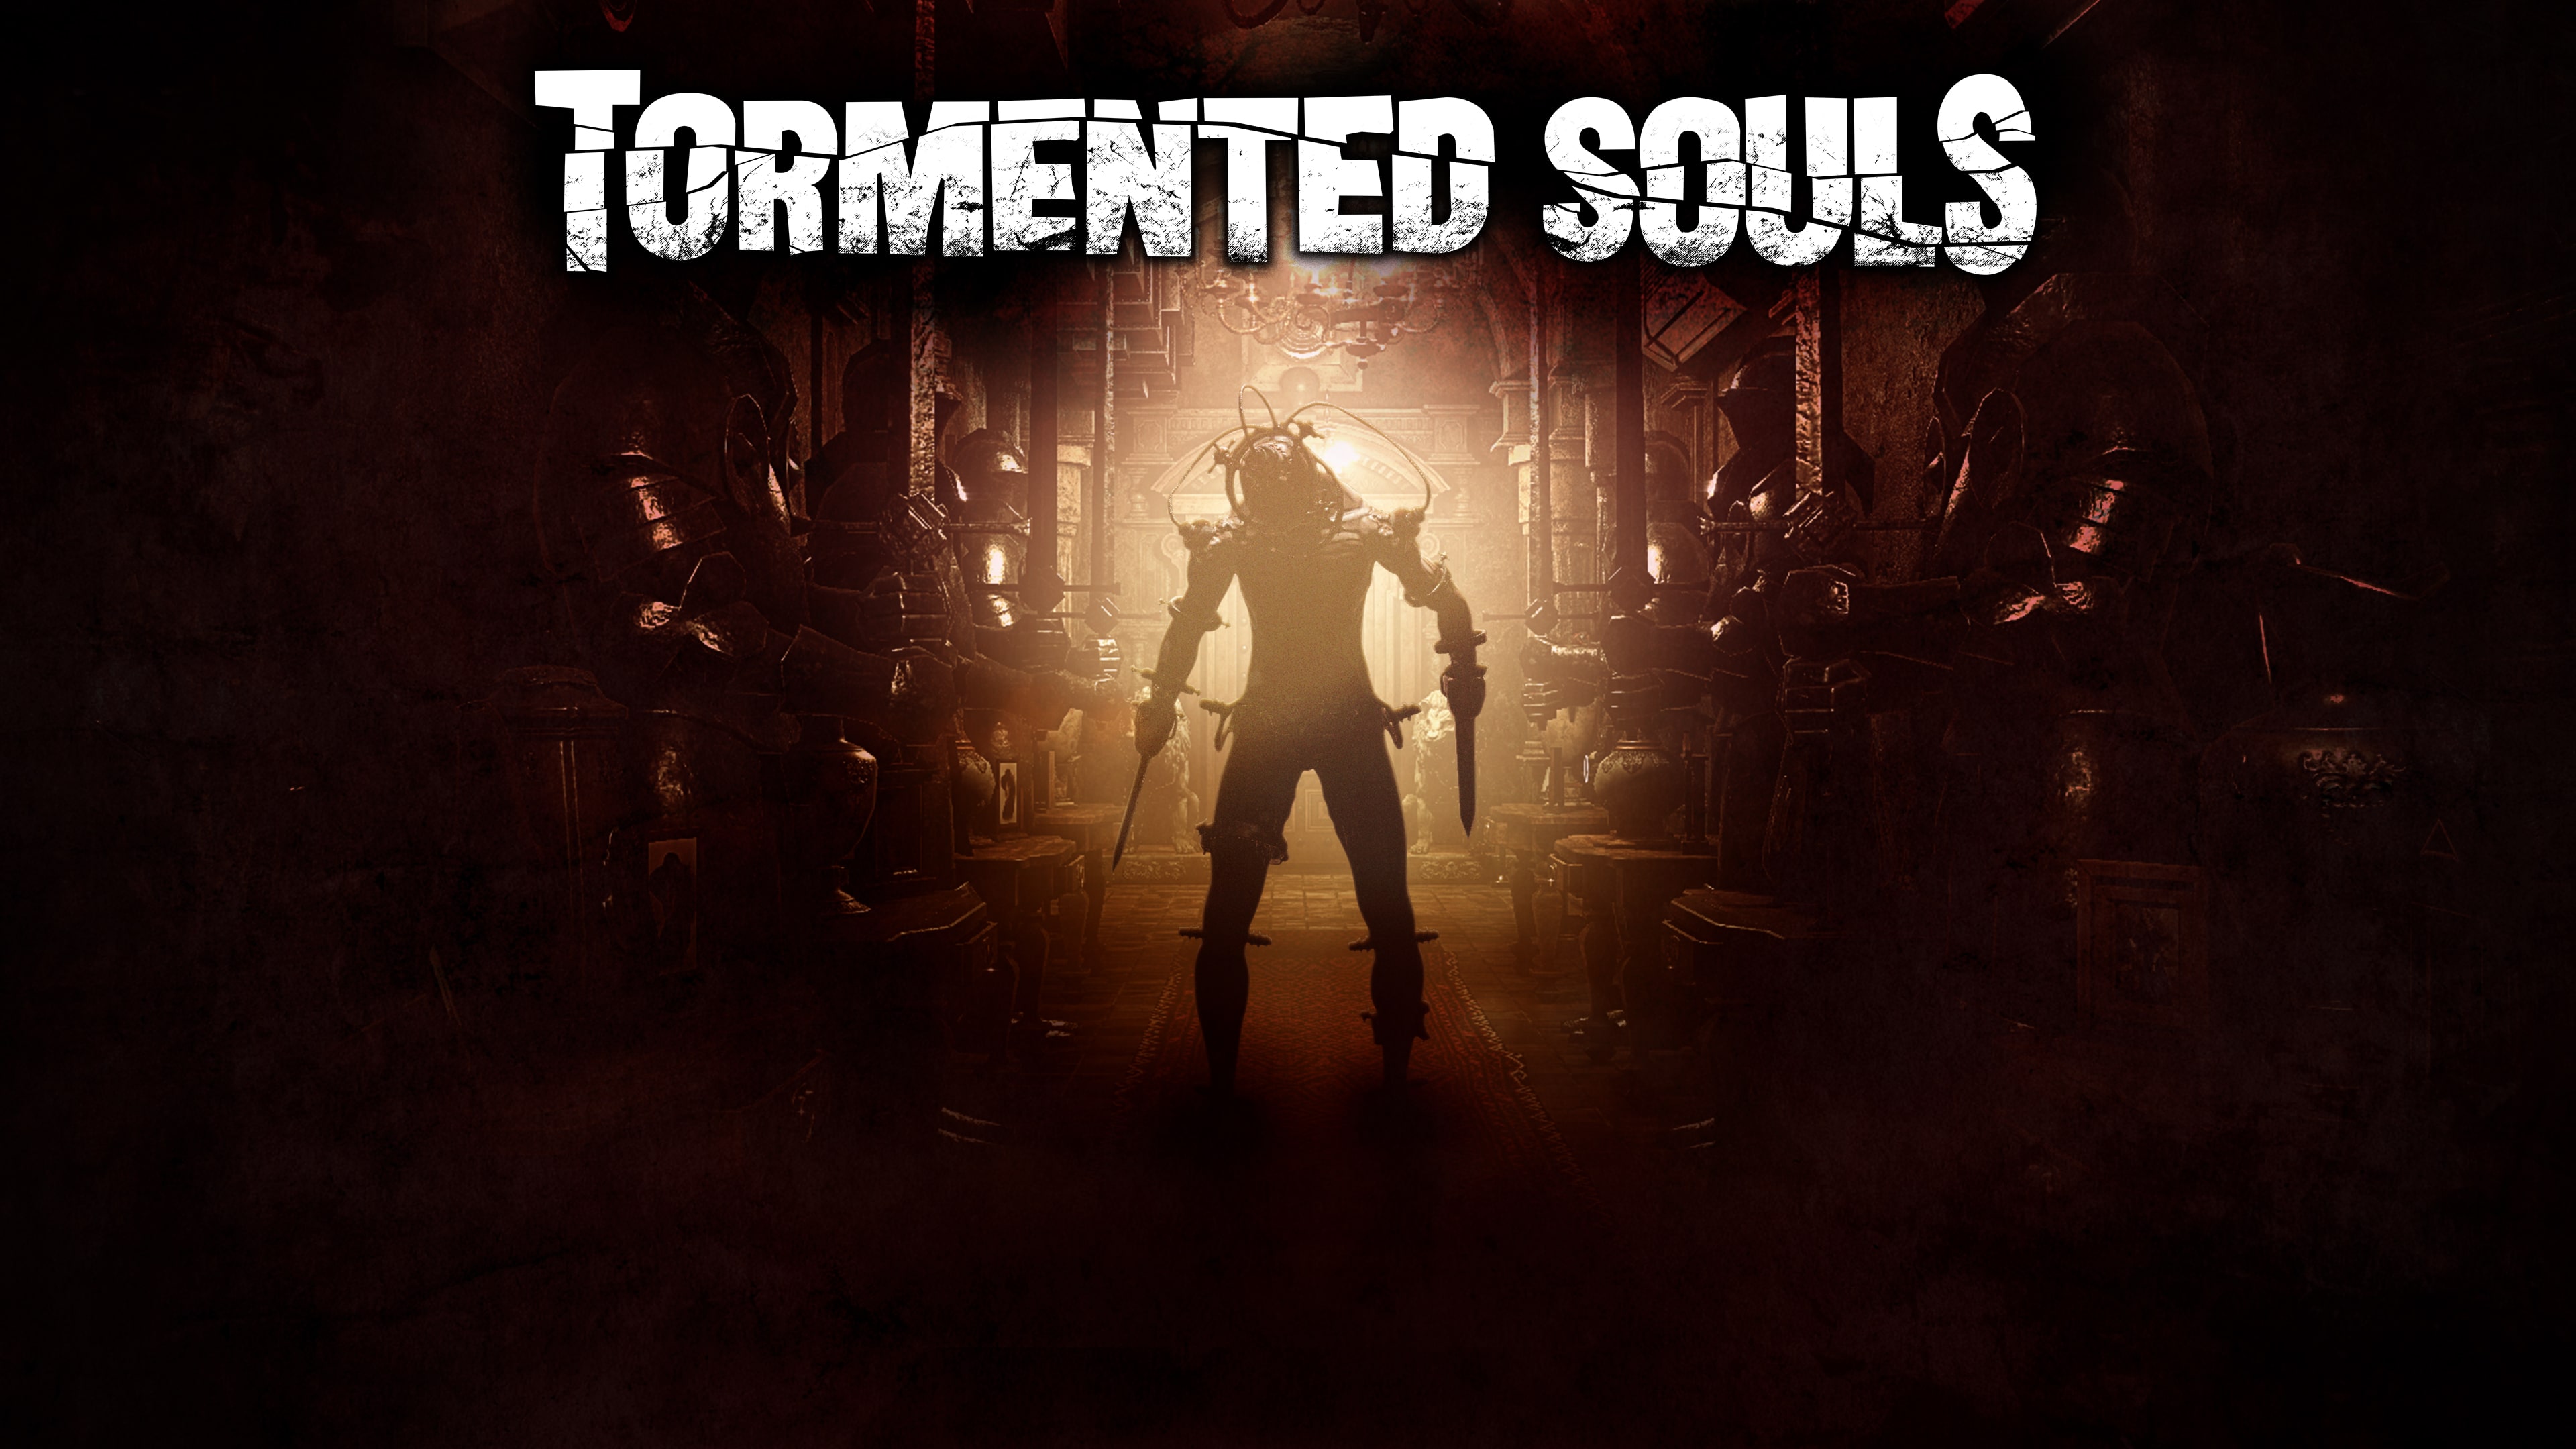 Tormented Souls Demo